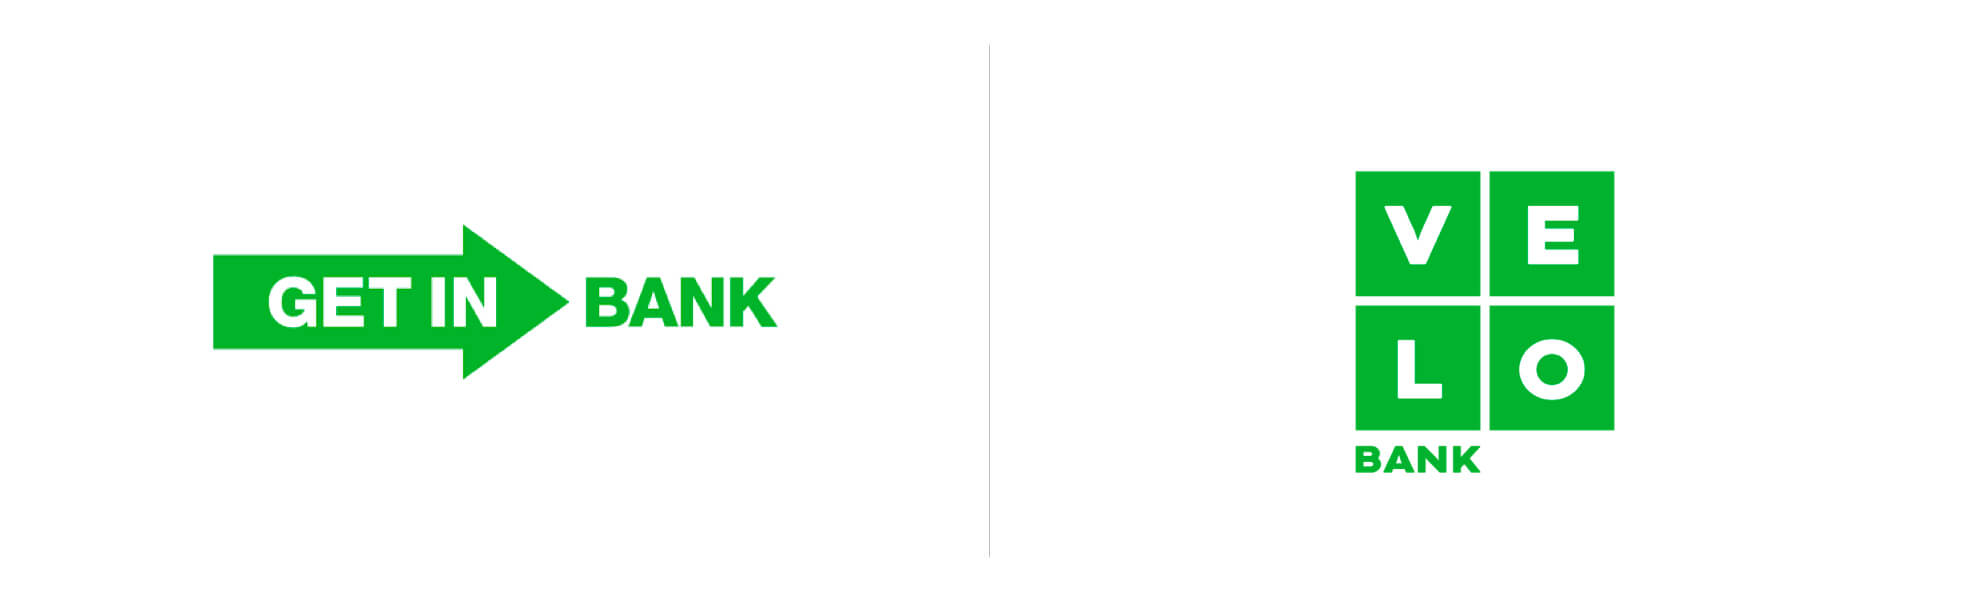 Logo Getin Banku i Velo banku